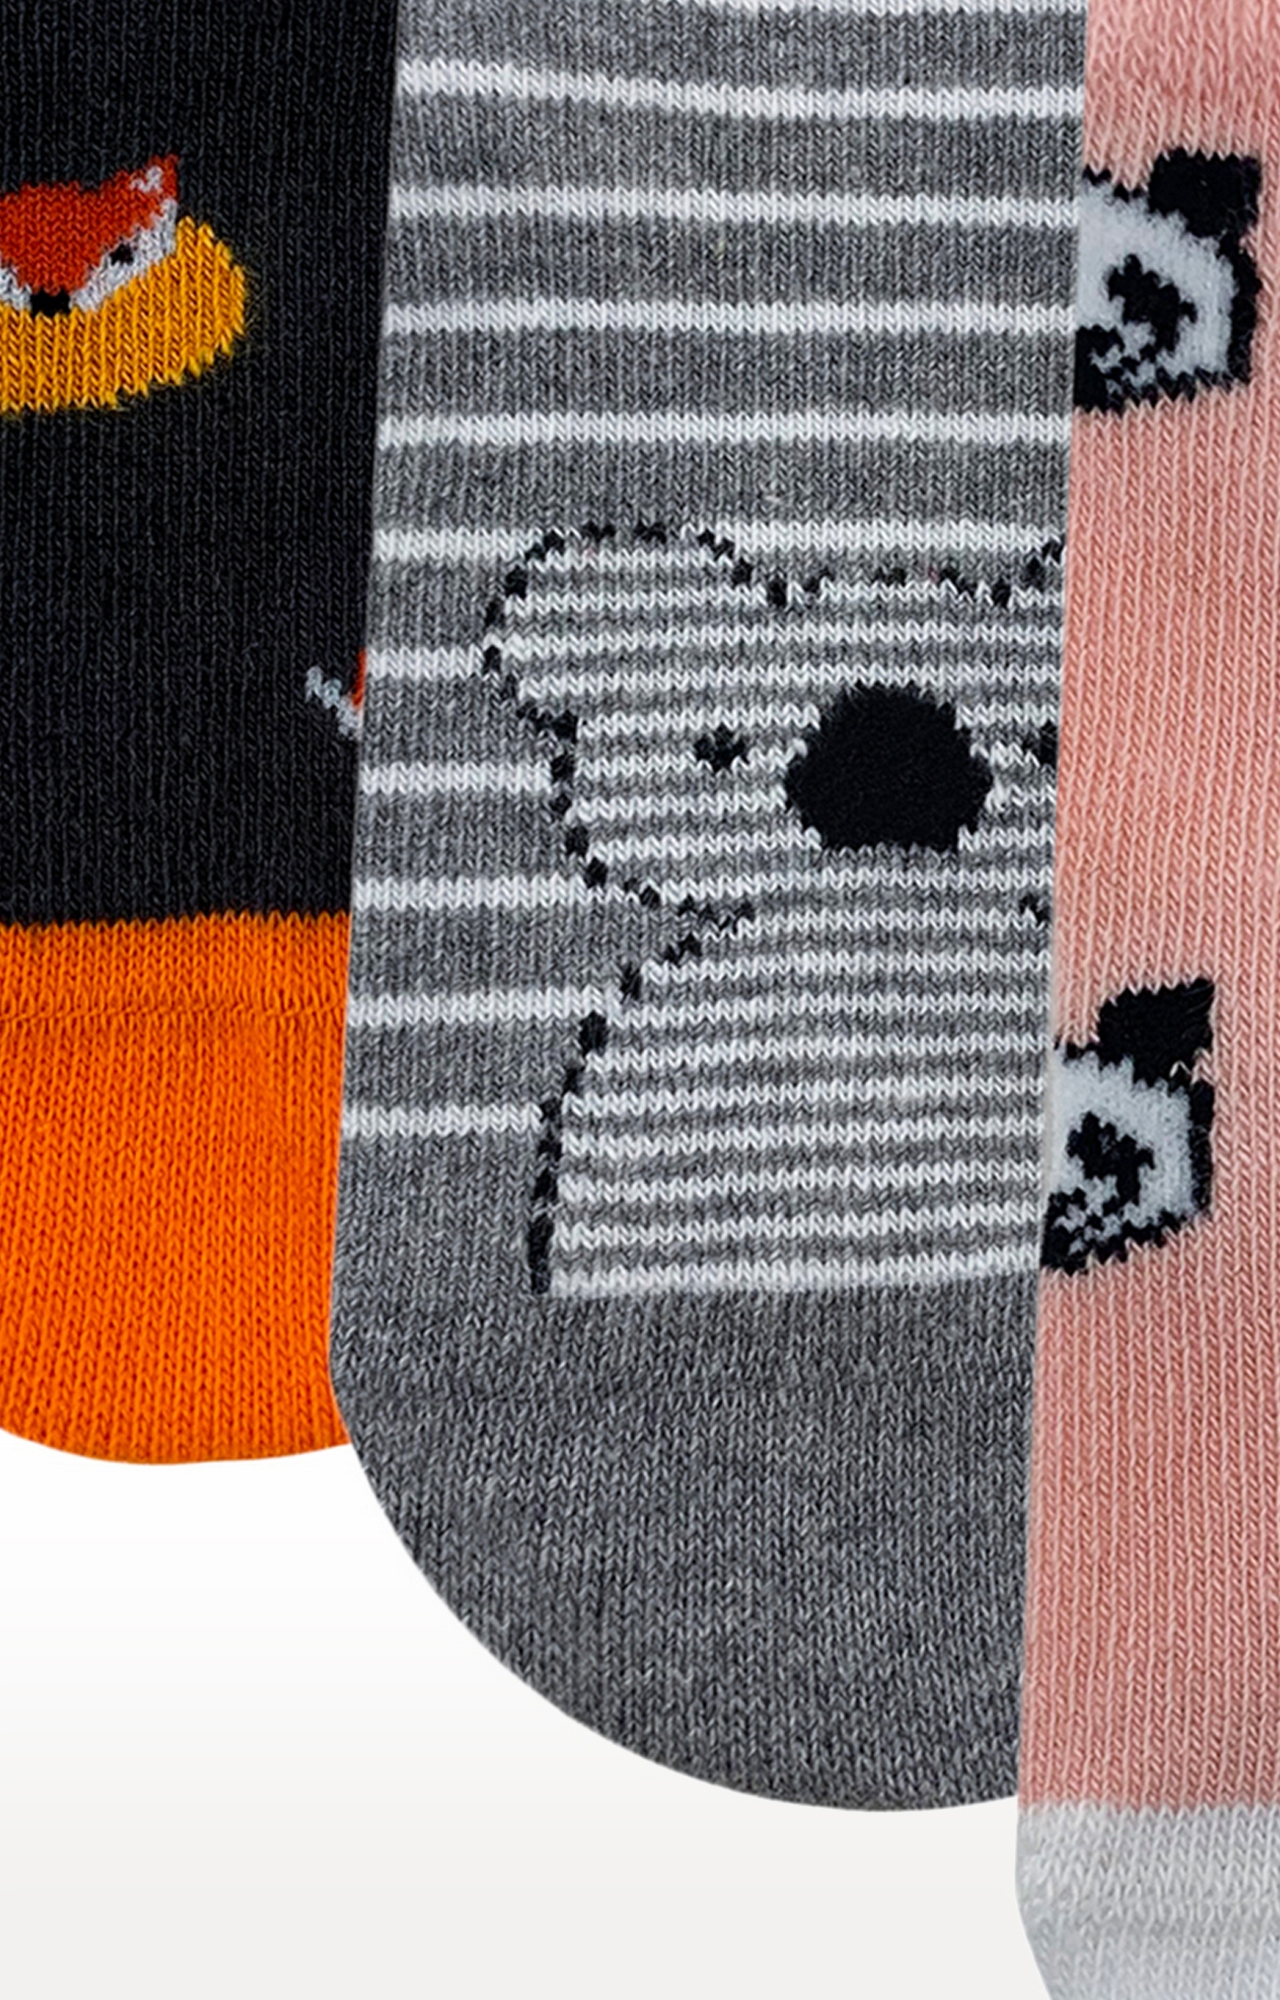 Mint & Oak Animal Cuteness Cotton Multi Ankle Length Socks for Kids - Pack of 3